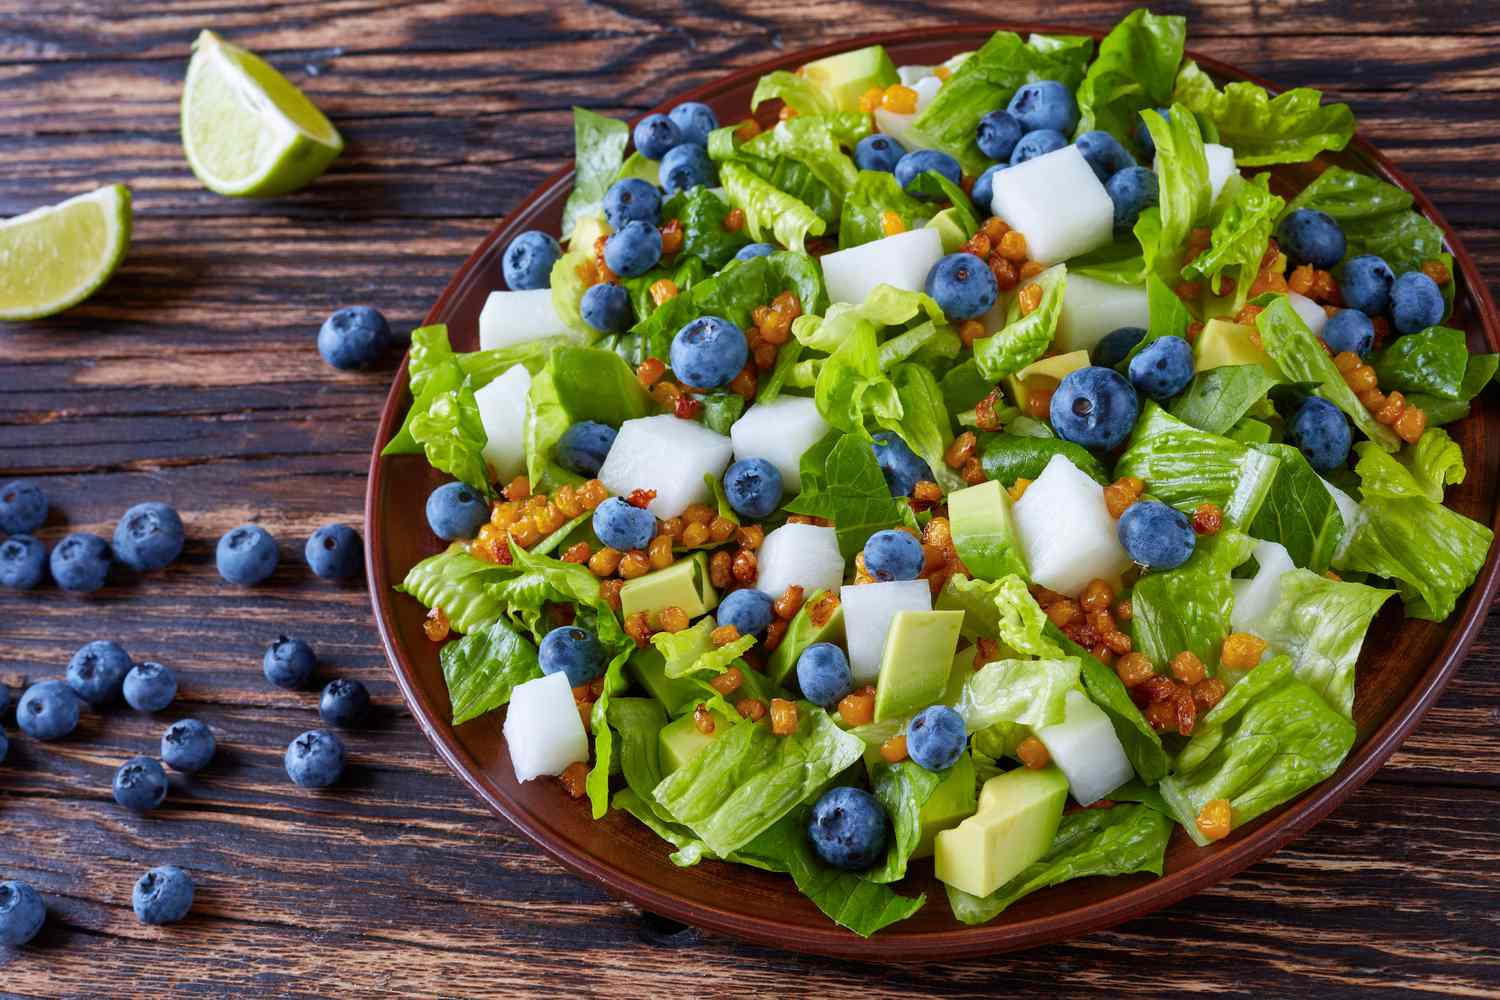 Salad with romaine, jicama, avocado and blueberries